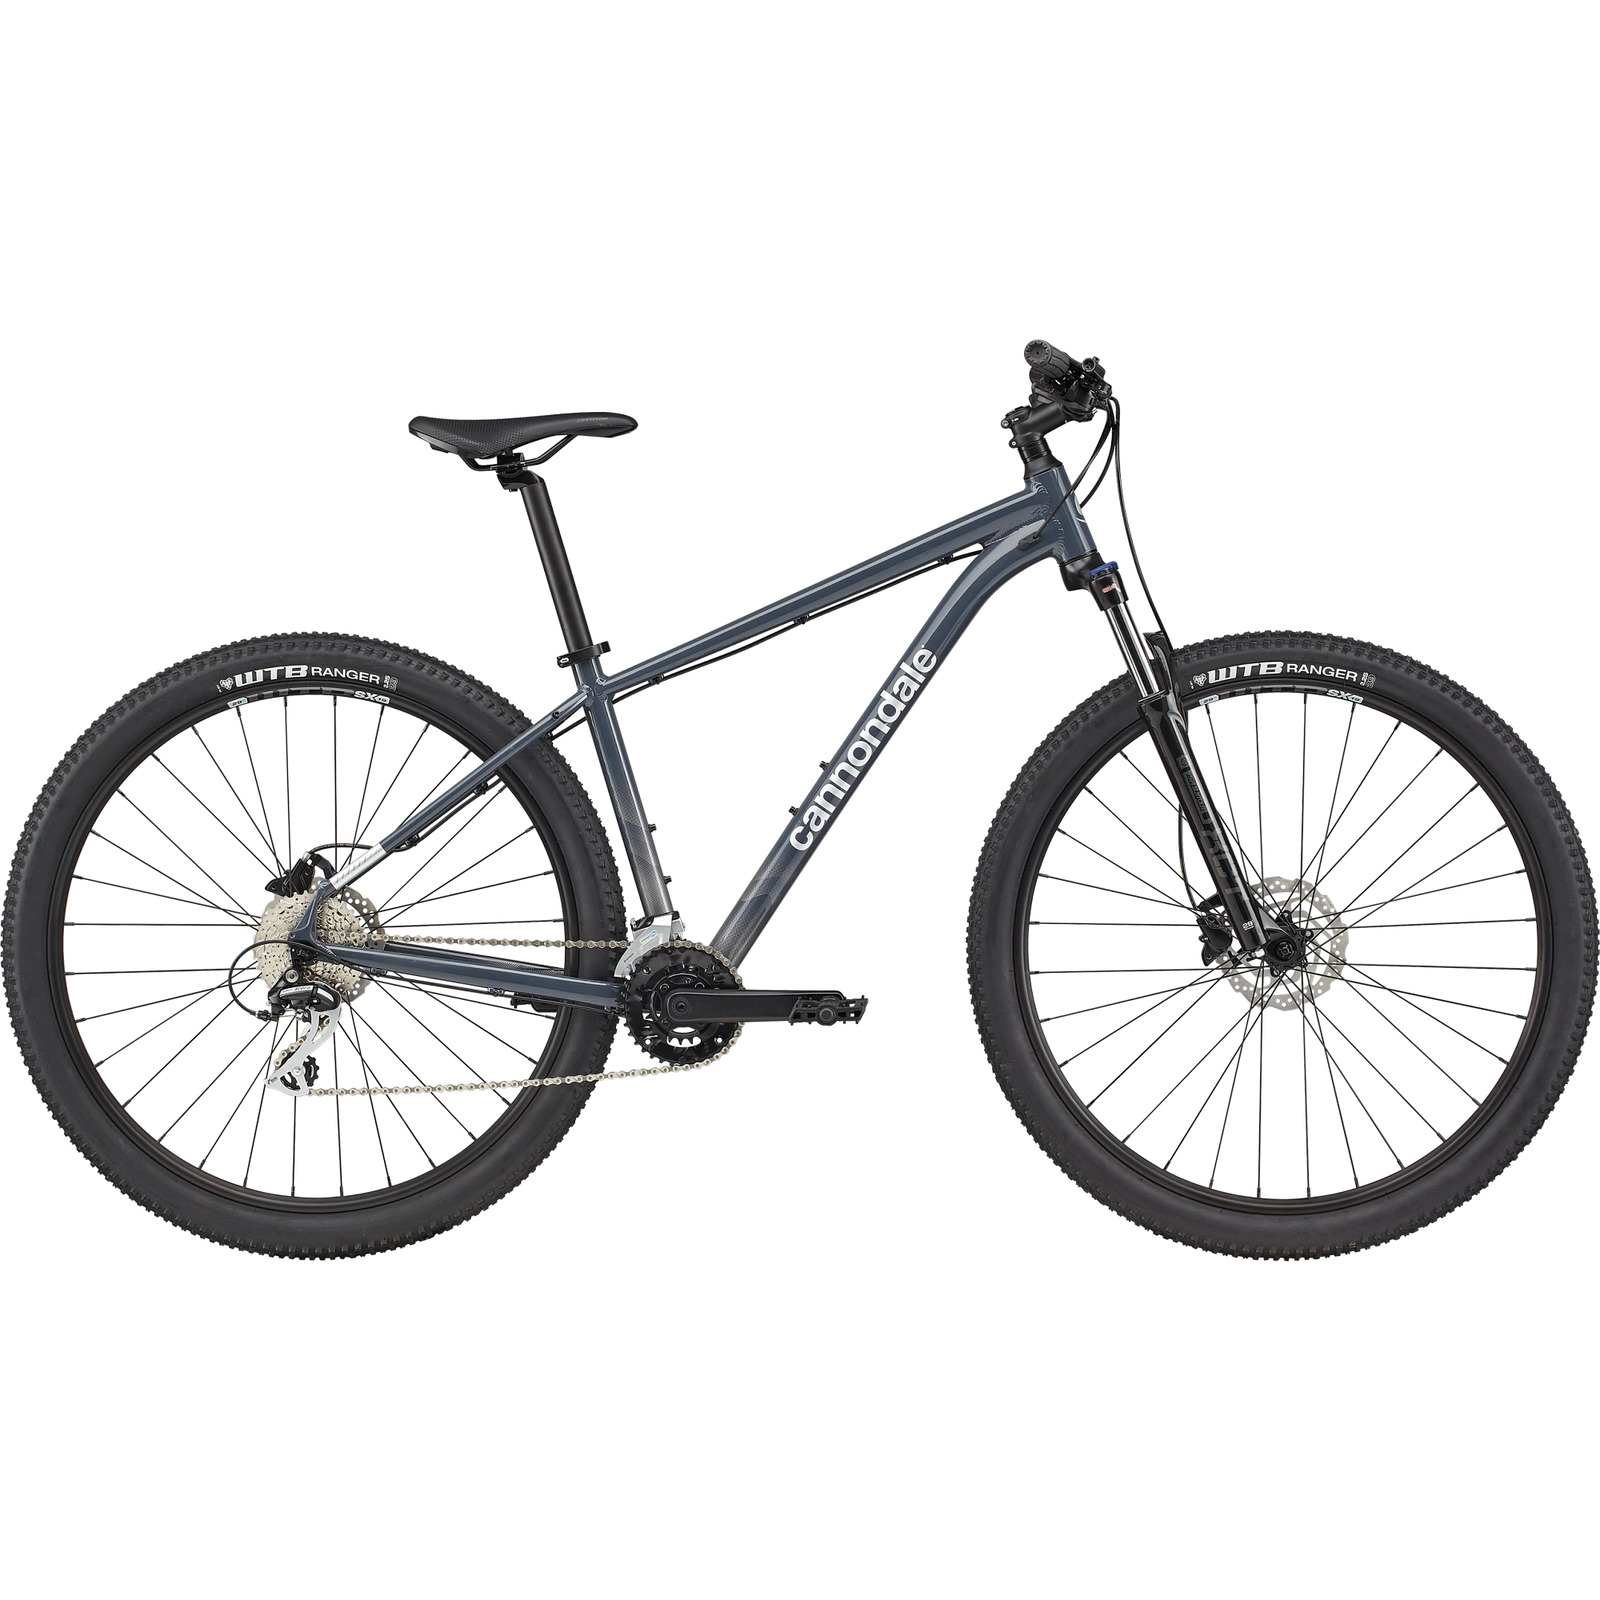 2021 Cannondale Trail 6 Disc Mountain Bike - reg. $860